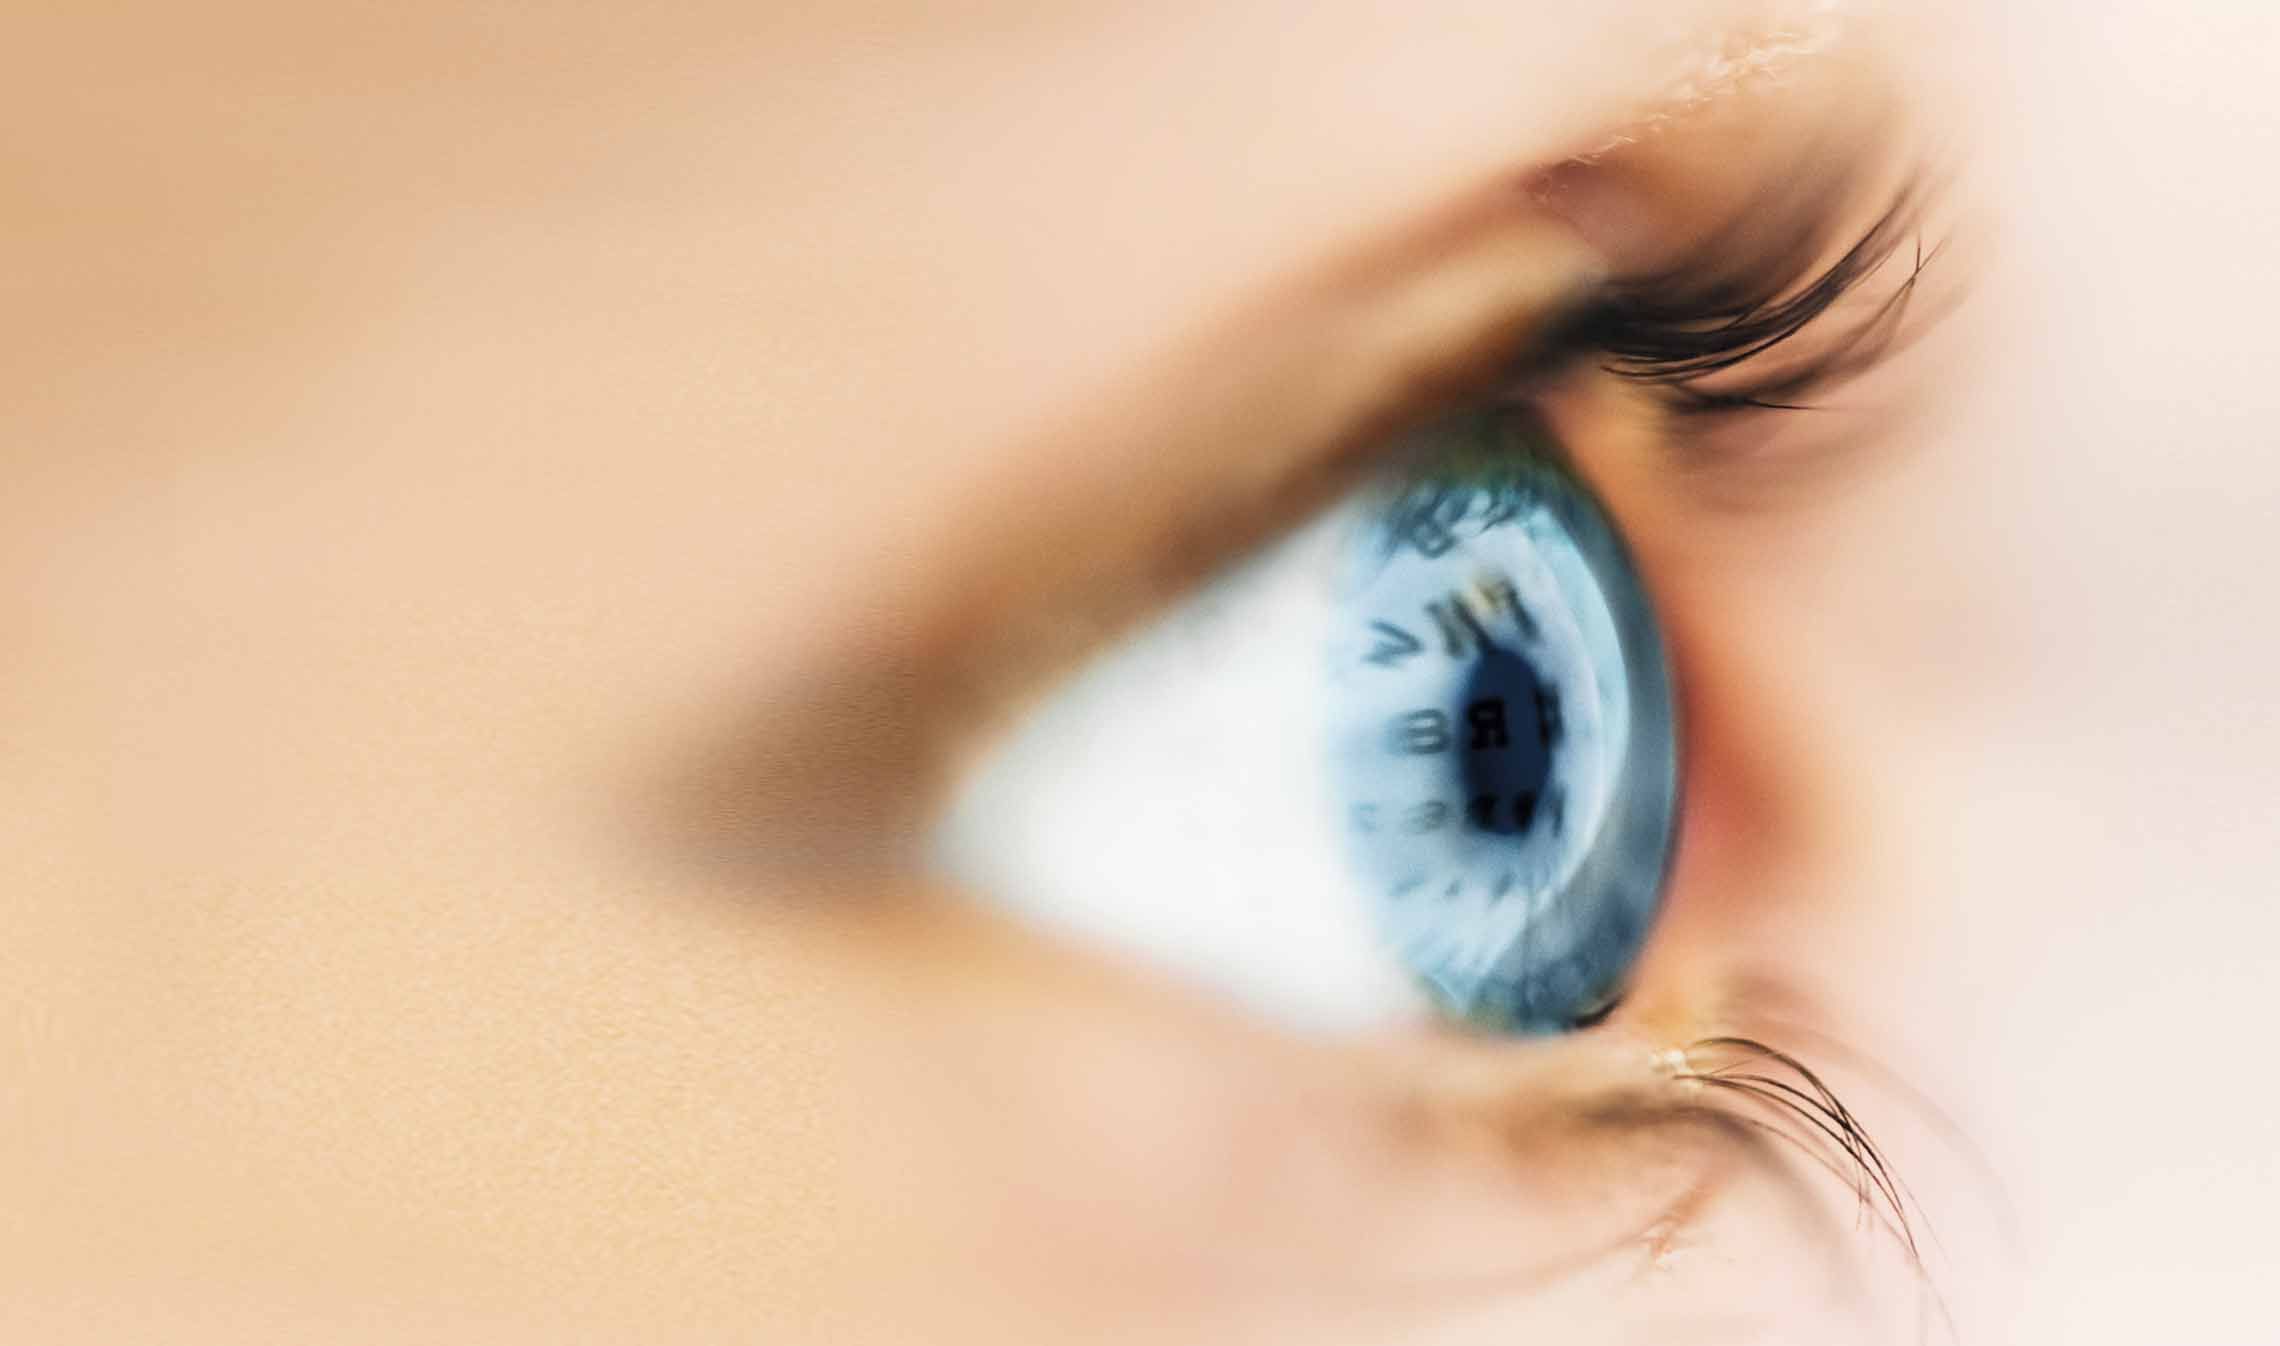 An Eye-for-an-Eye will eradicate blindness